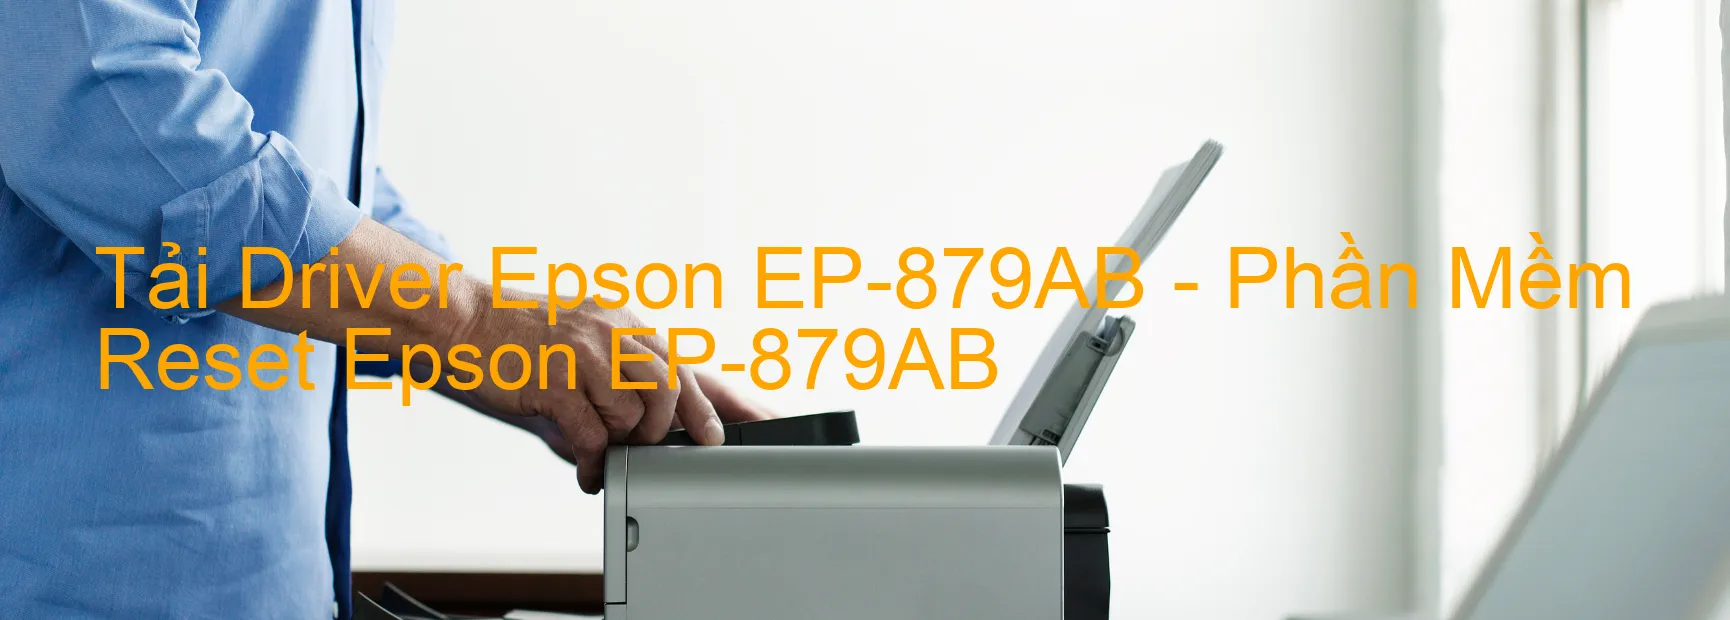 Driver Epson EP-879AB, Phần Mềm Reset Epson EP-879AB